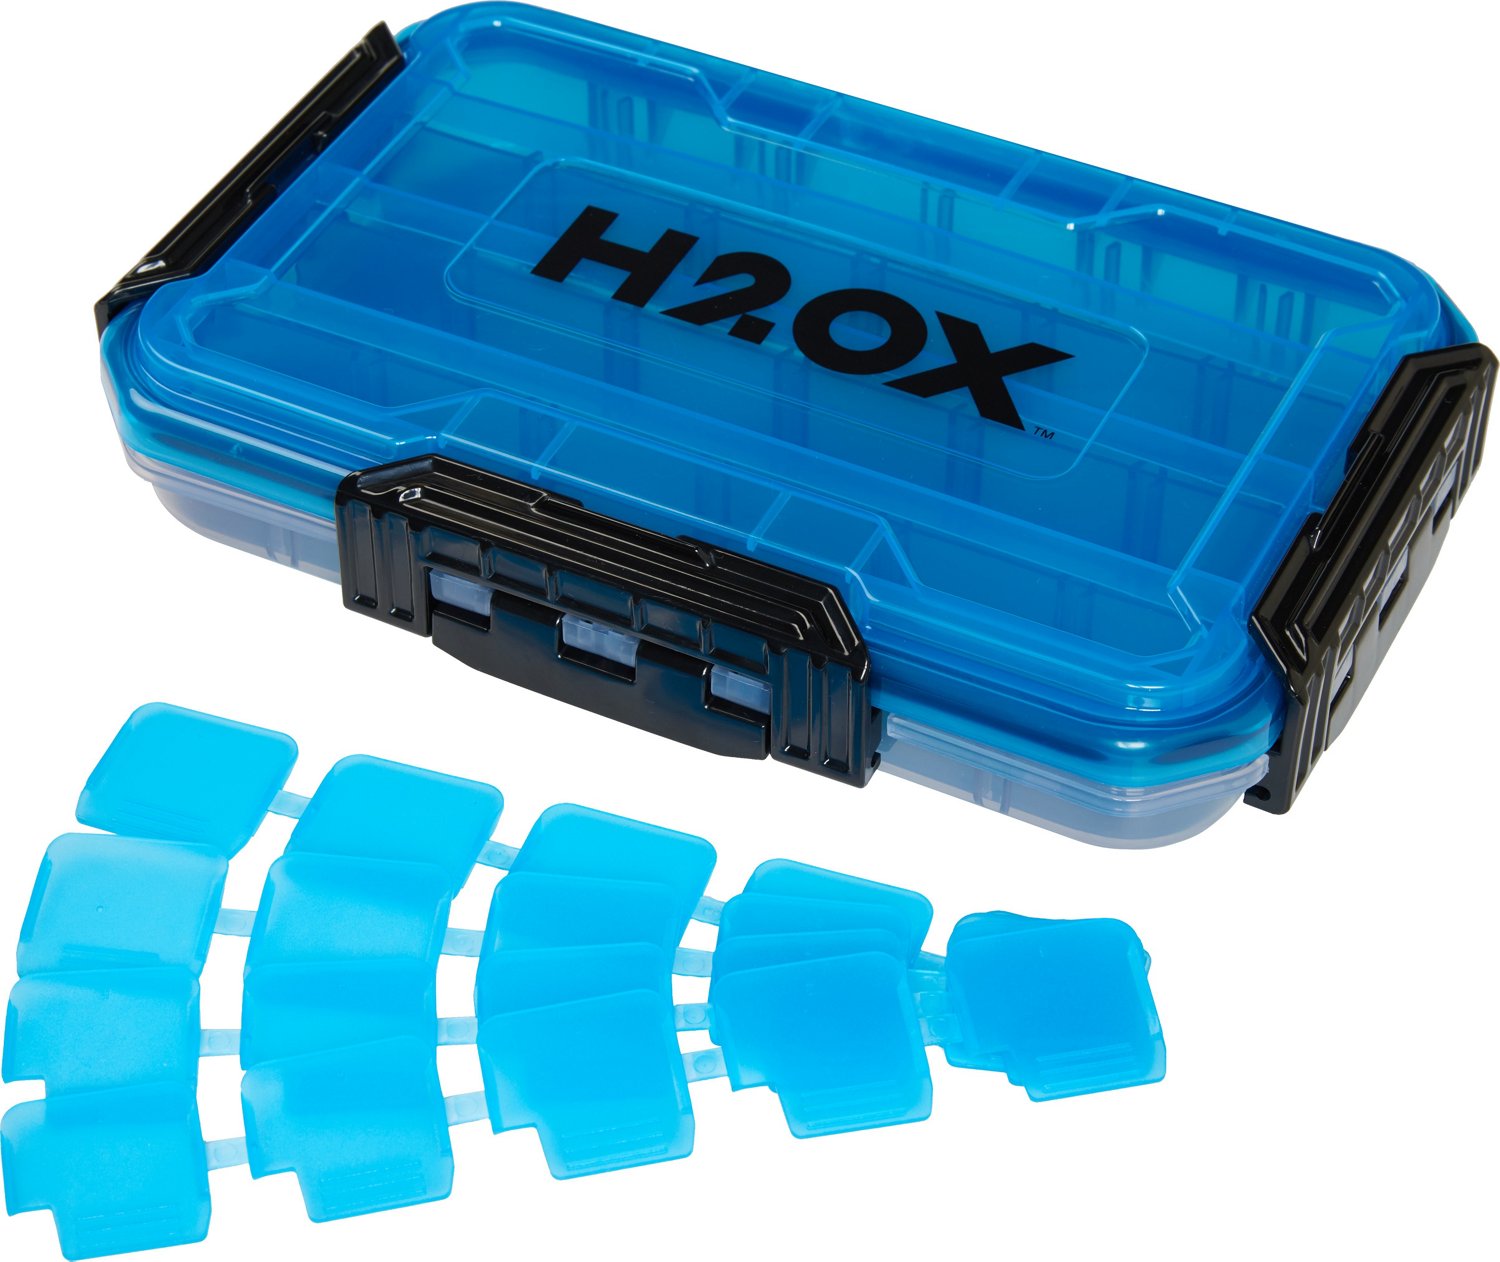 H2OX 3600 Waterproof Utility Box